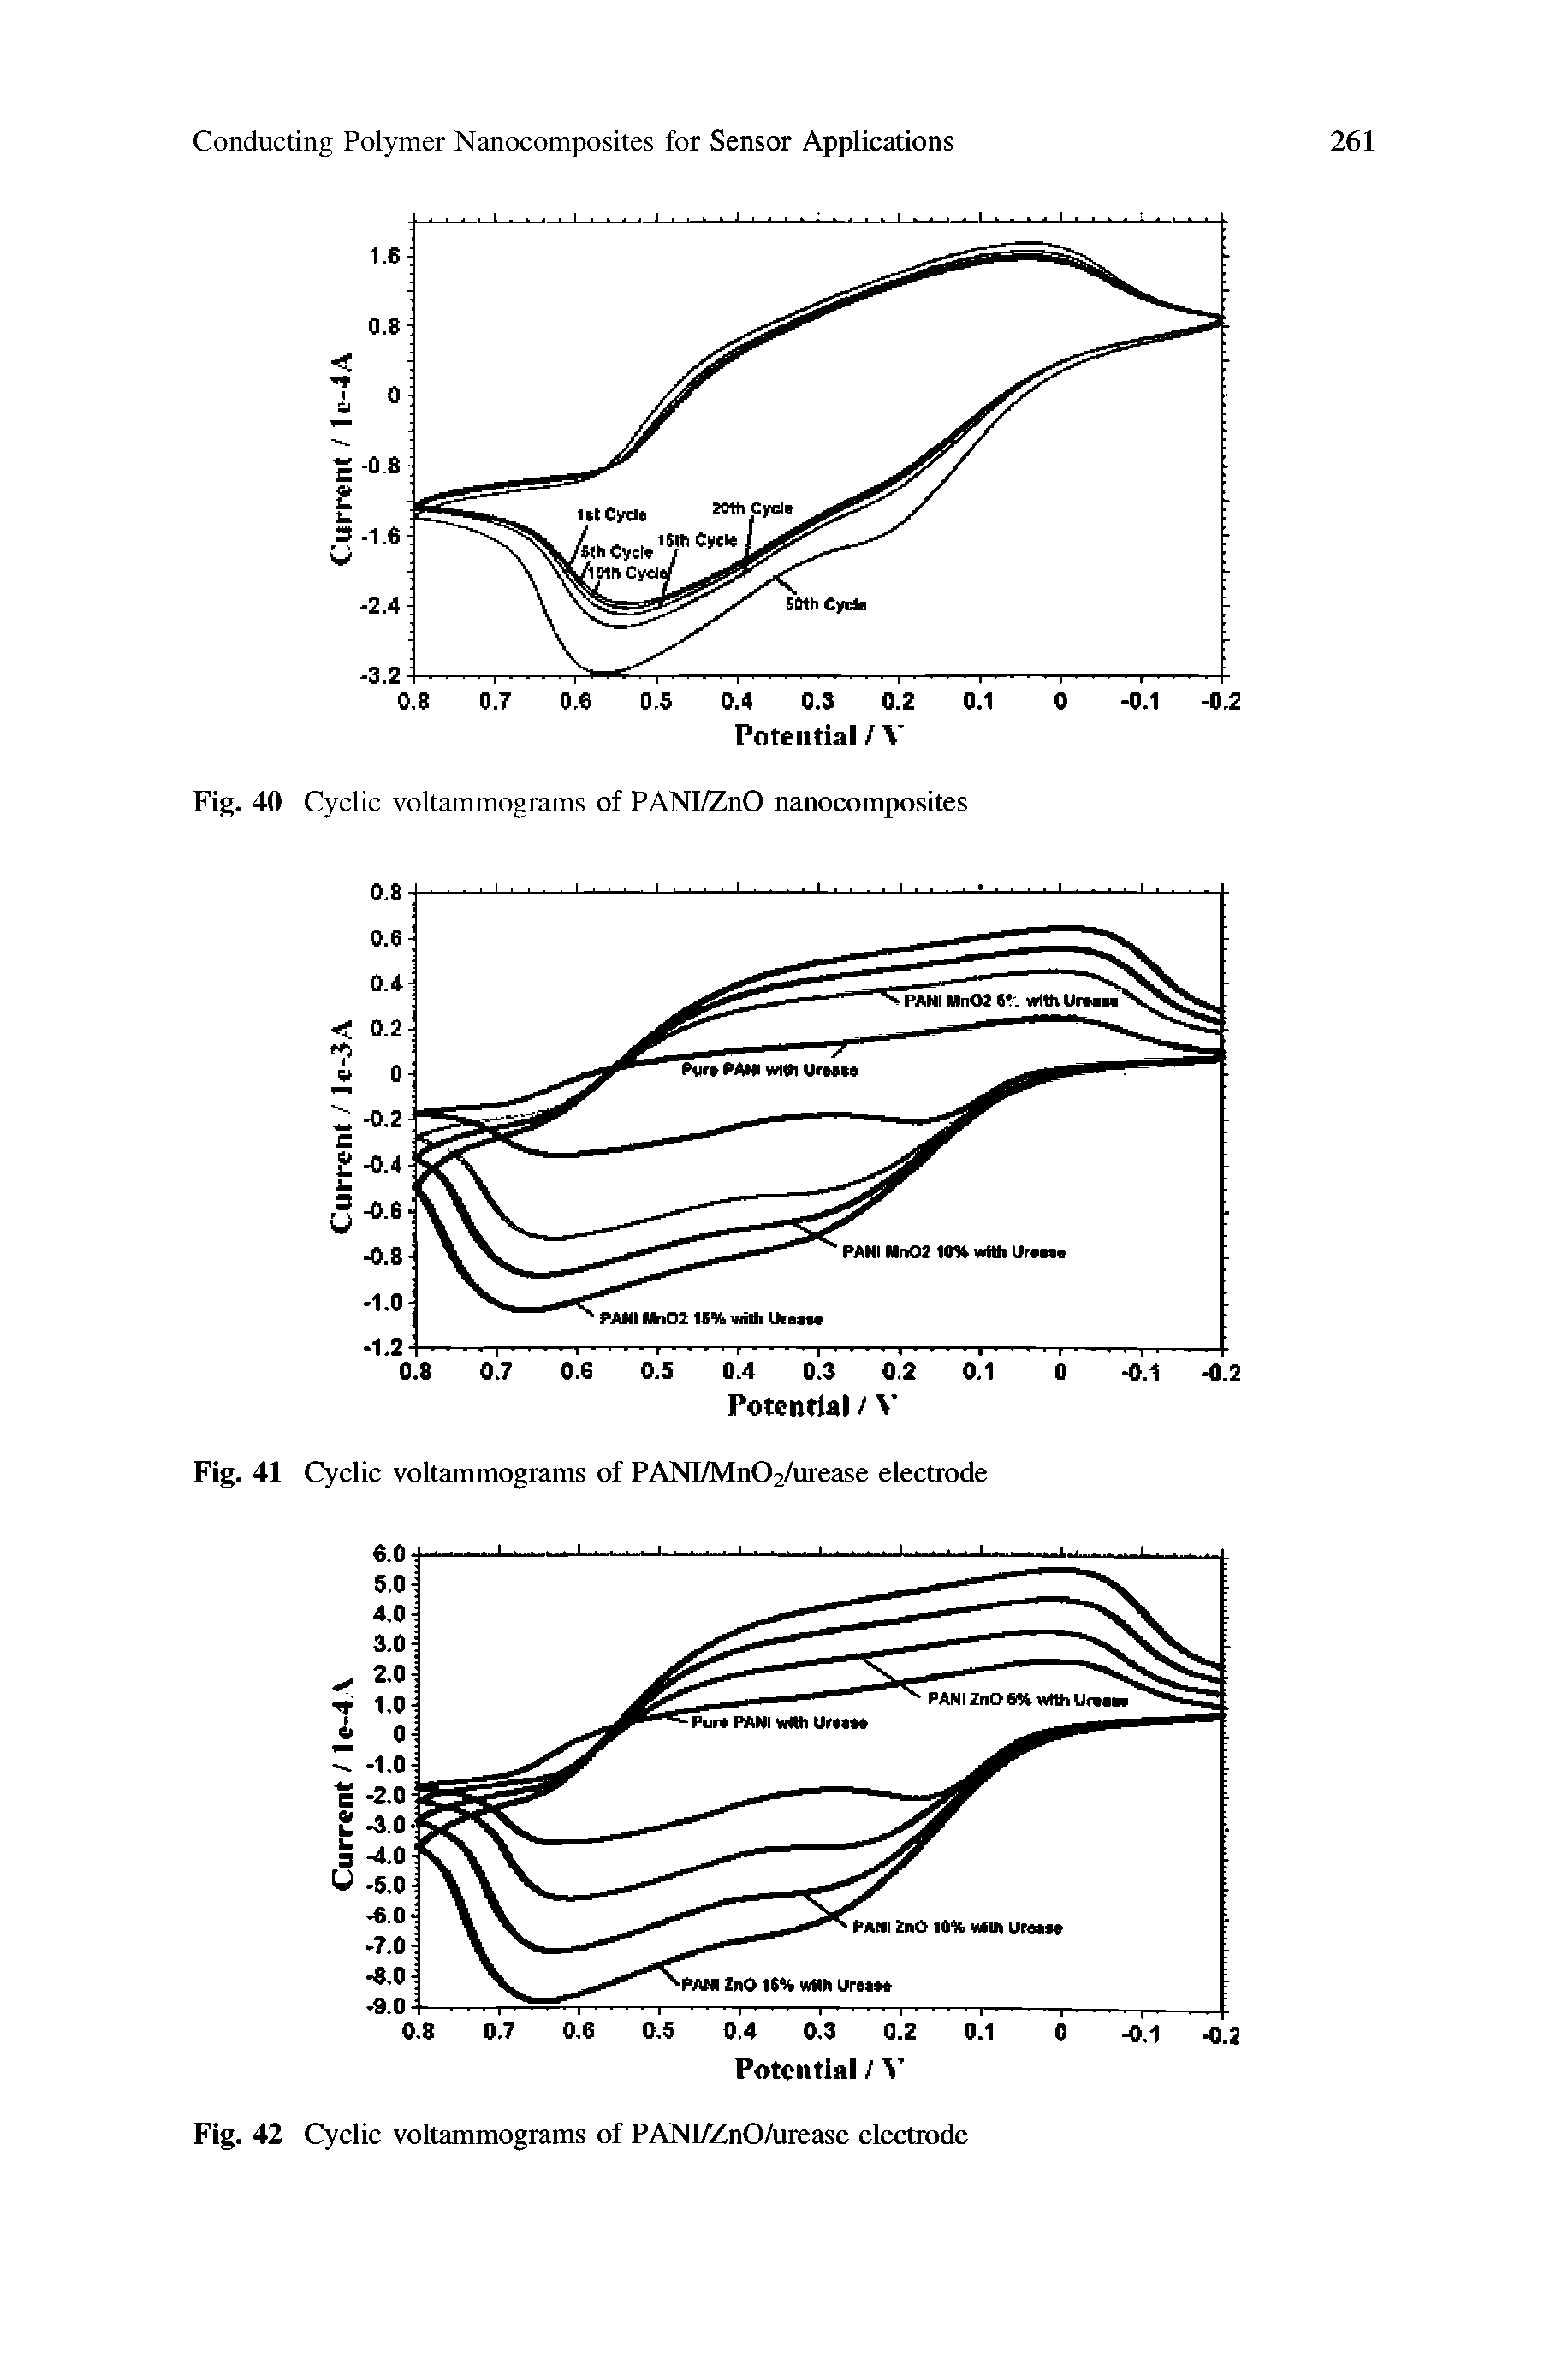 Fig. 41 Cyclic voltammograms of PANI/Mn02/urease electrode...